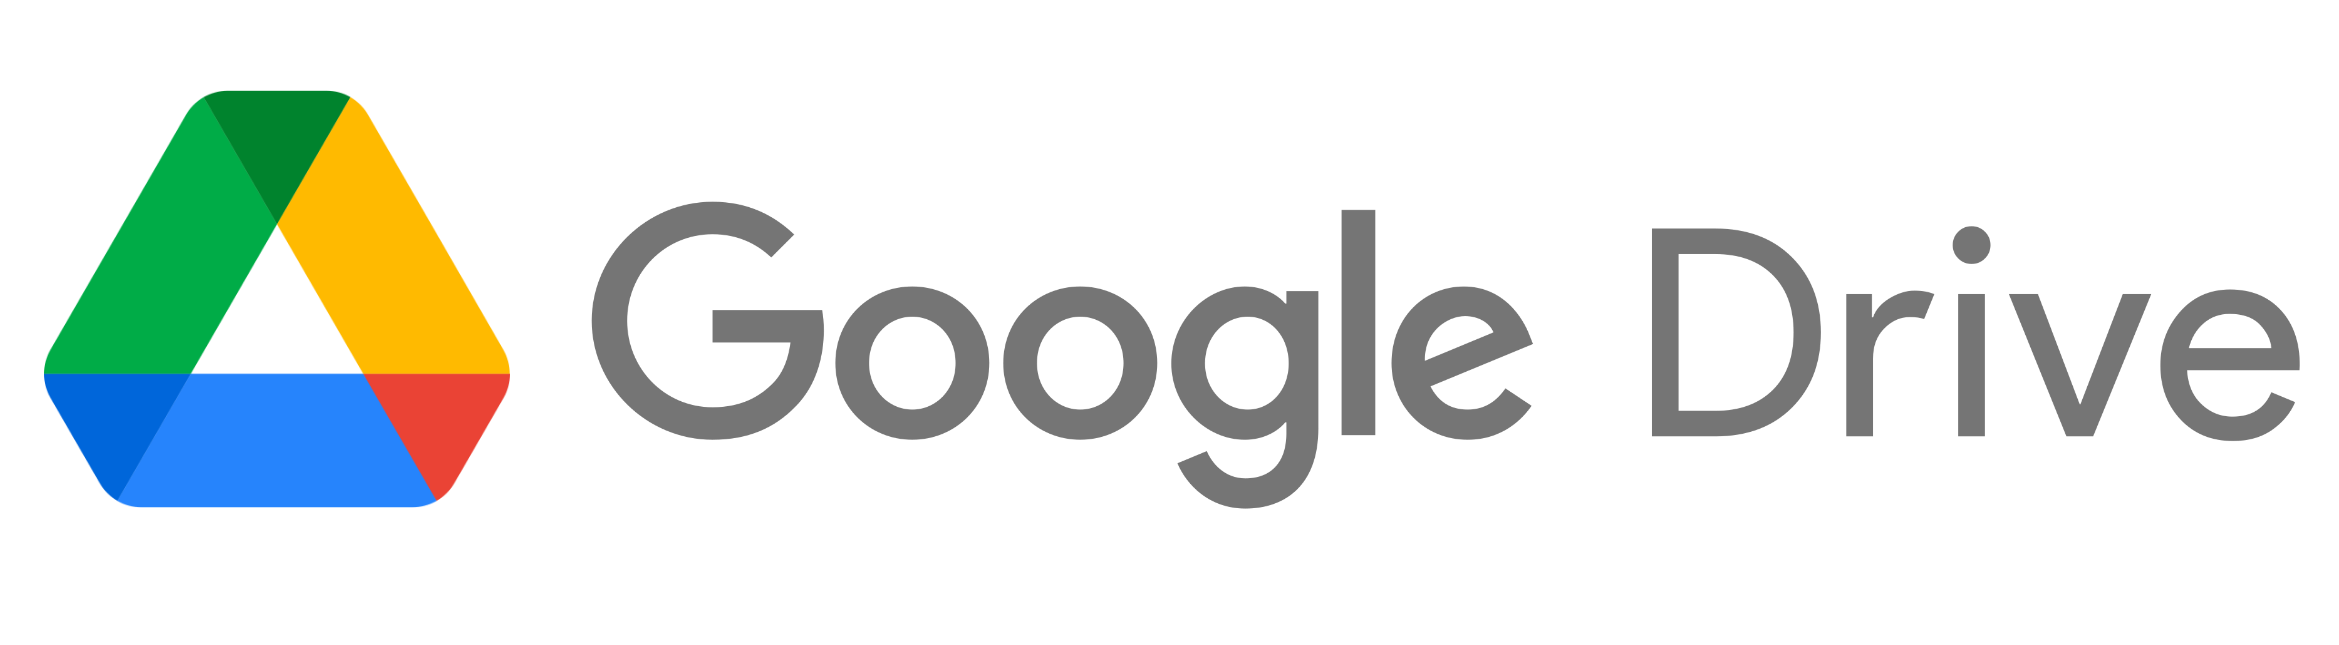 Google Drive Logo Png